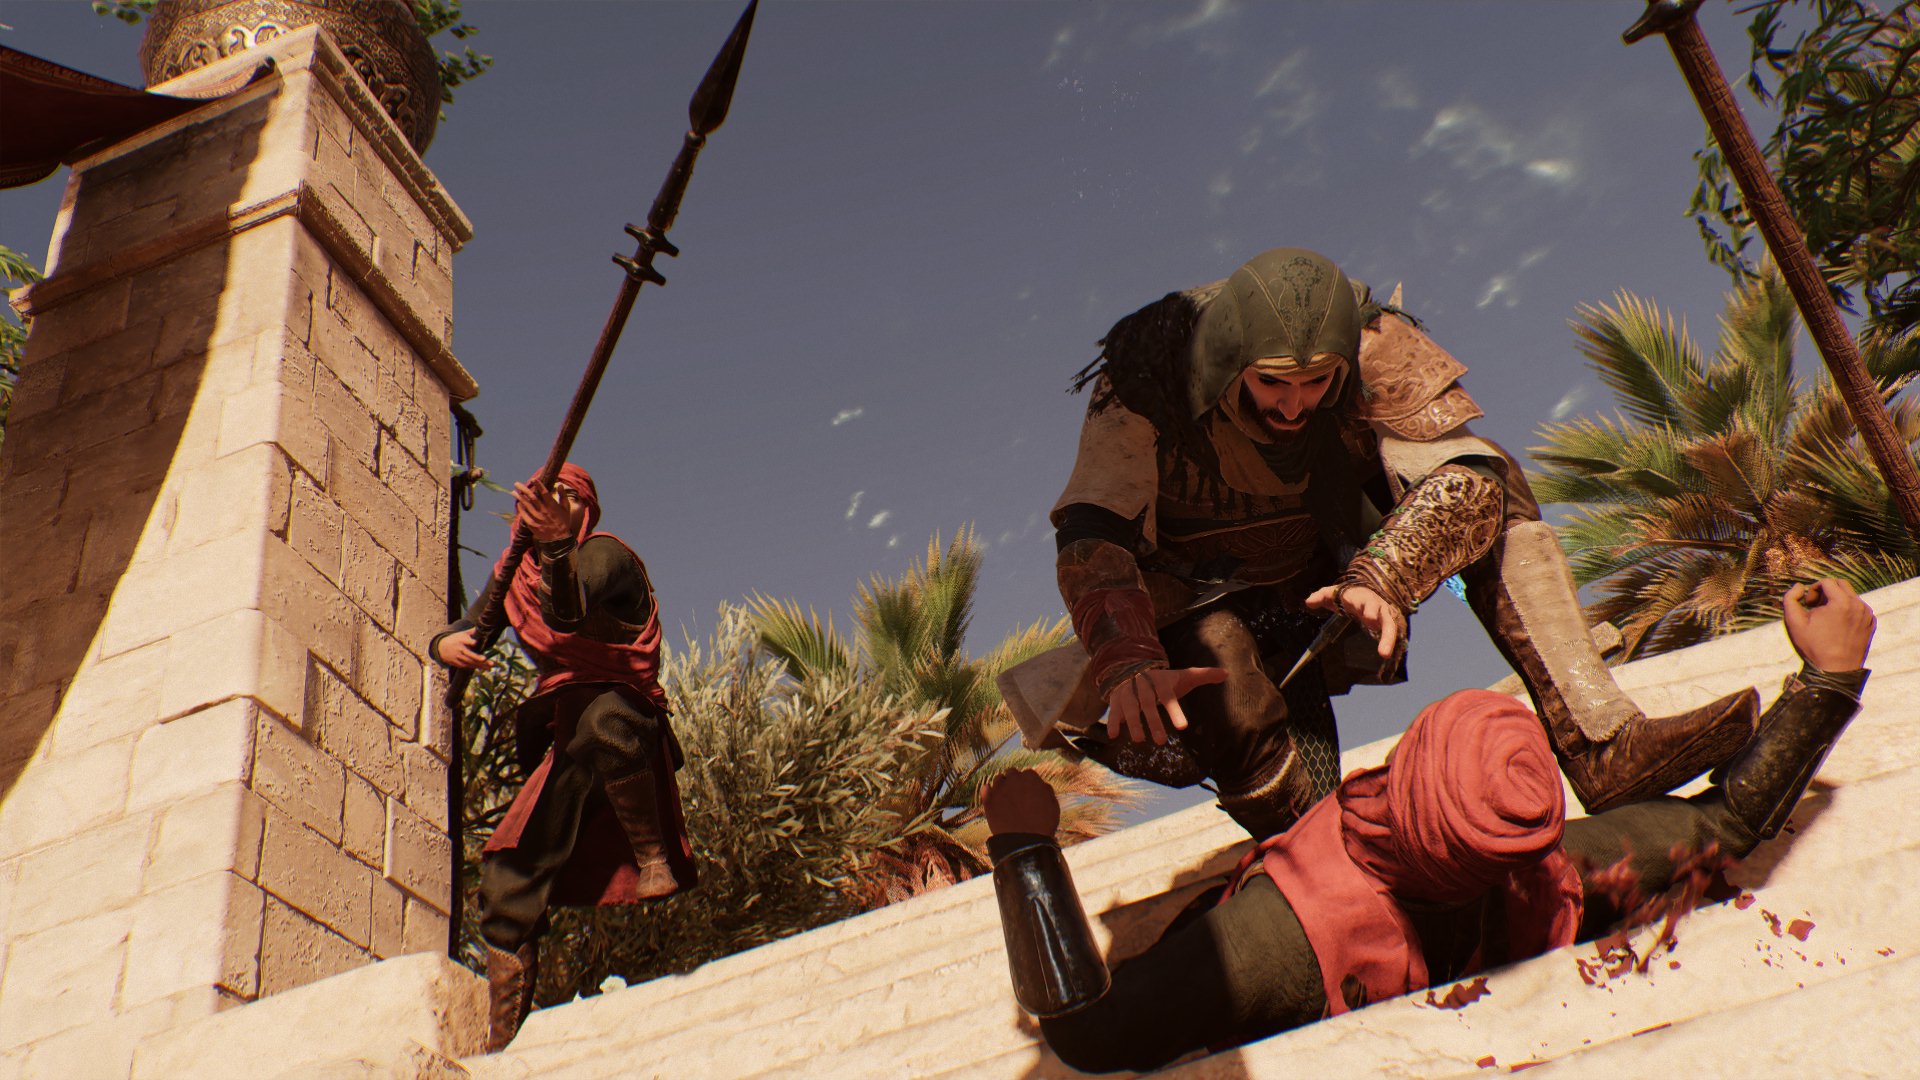 Assassin's Creed Valhalla: um conto viking de luz e sombras